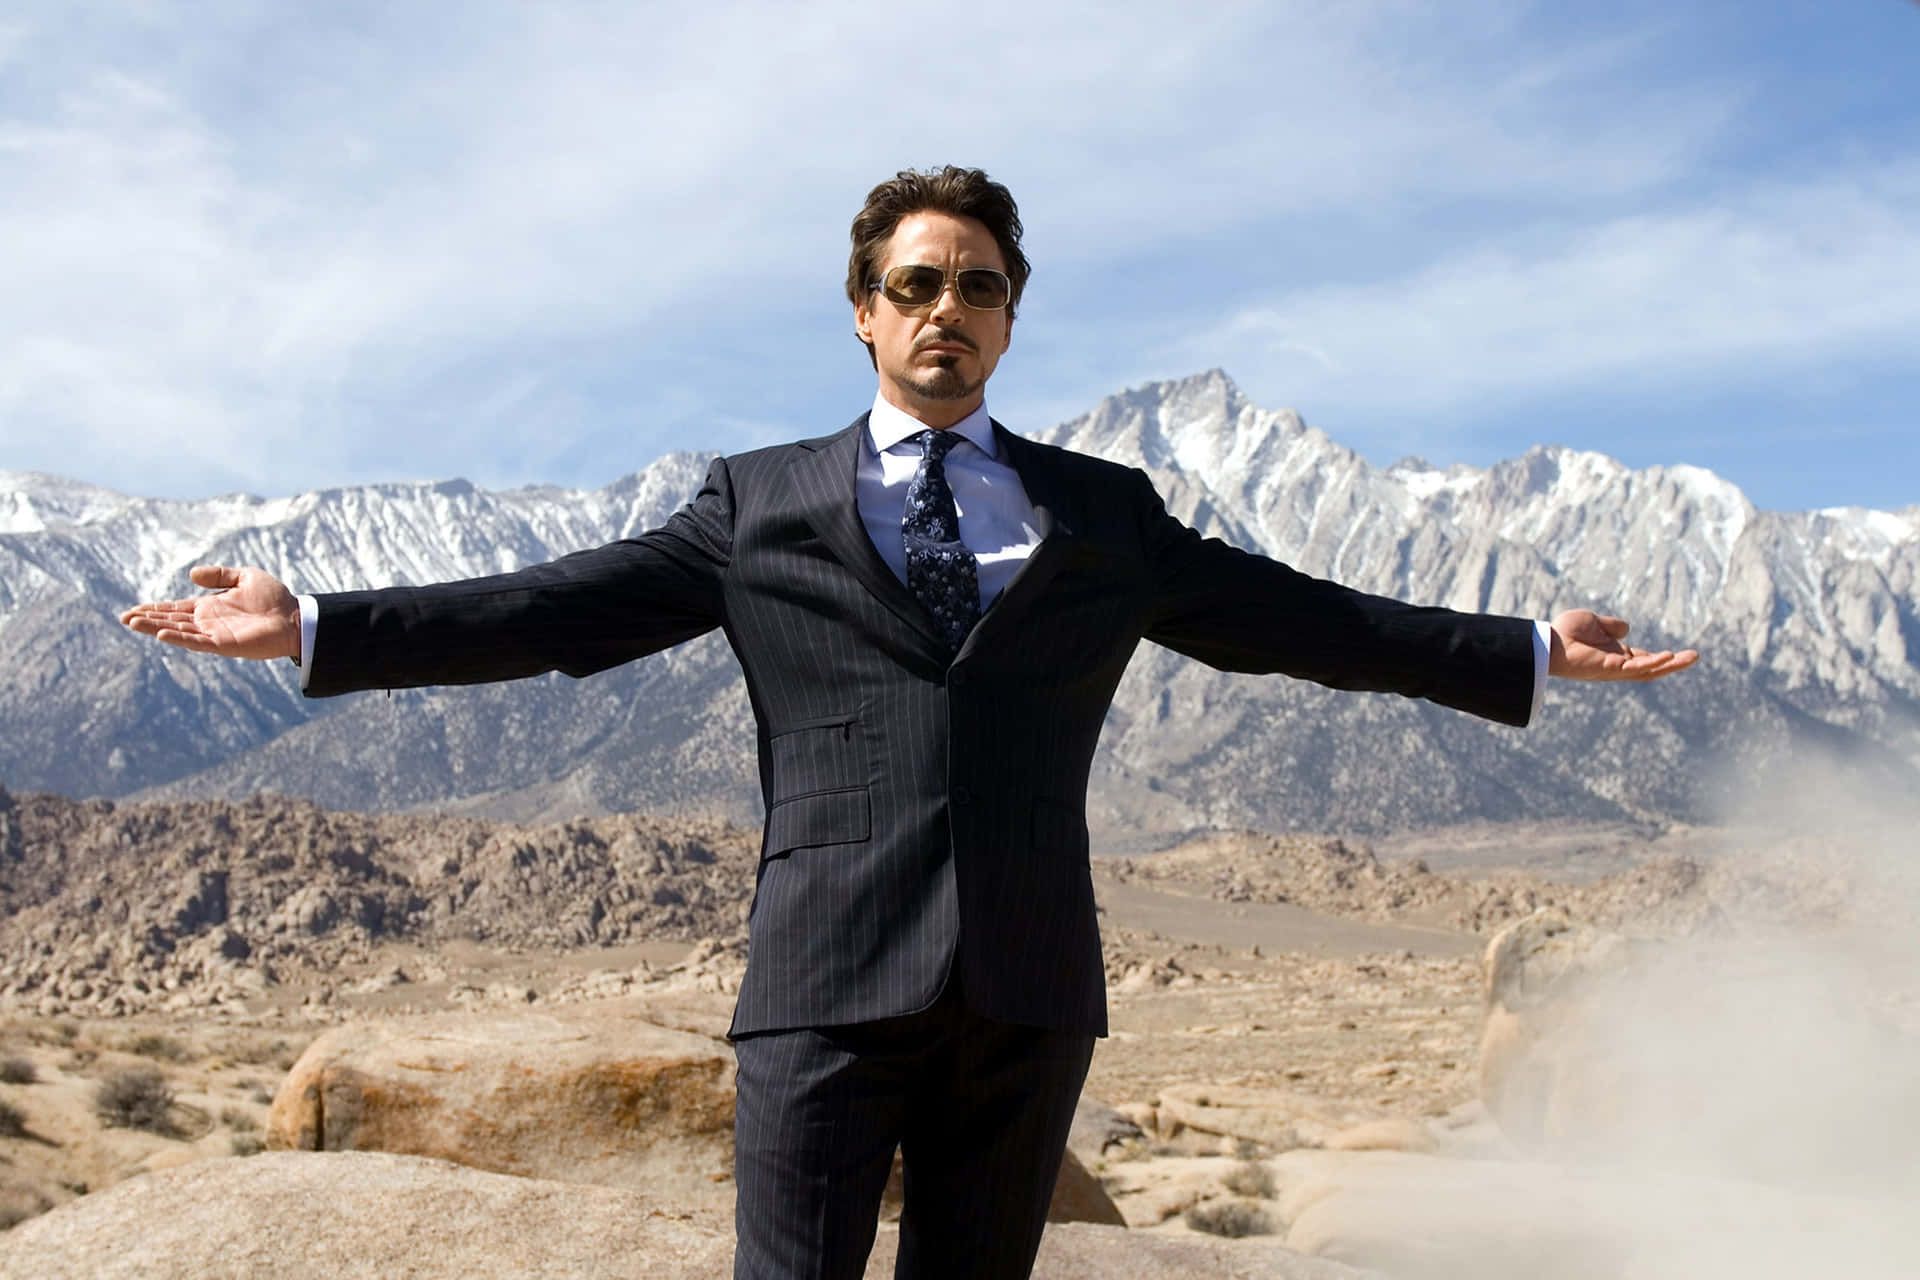 Imagende Iron Man Robert Downey Jr En El Desierto.